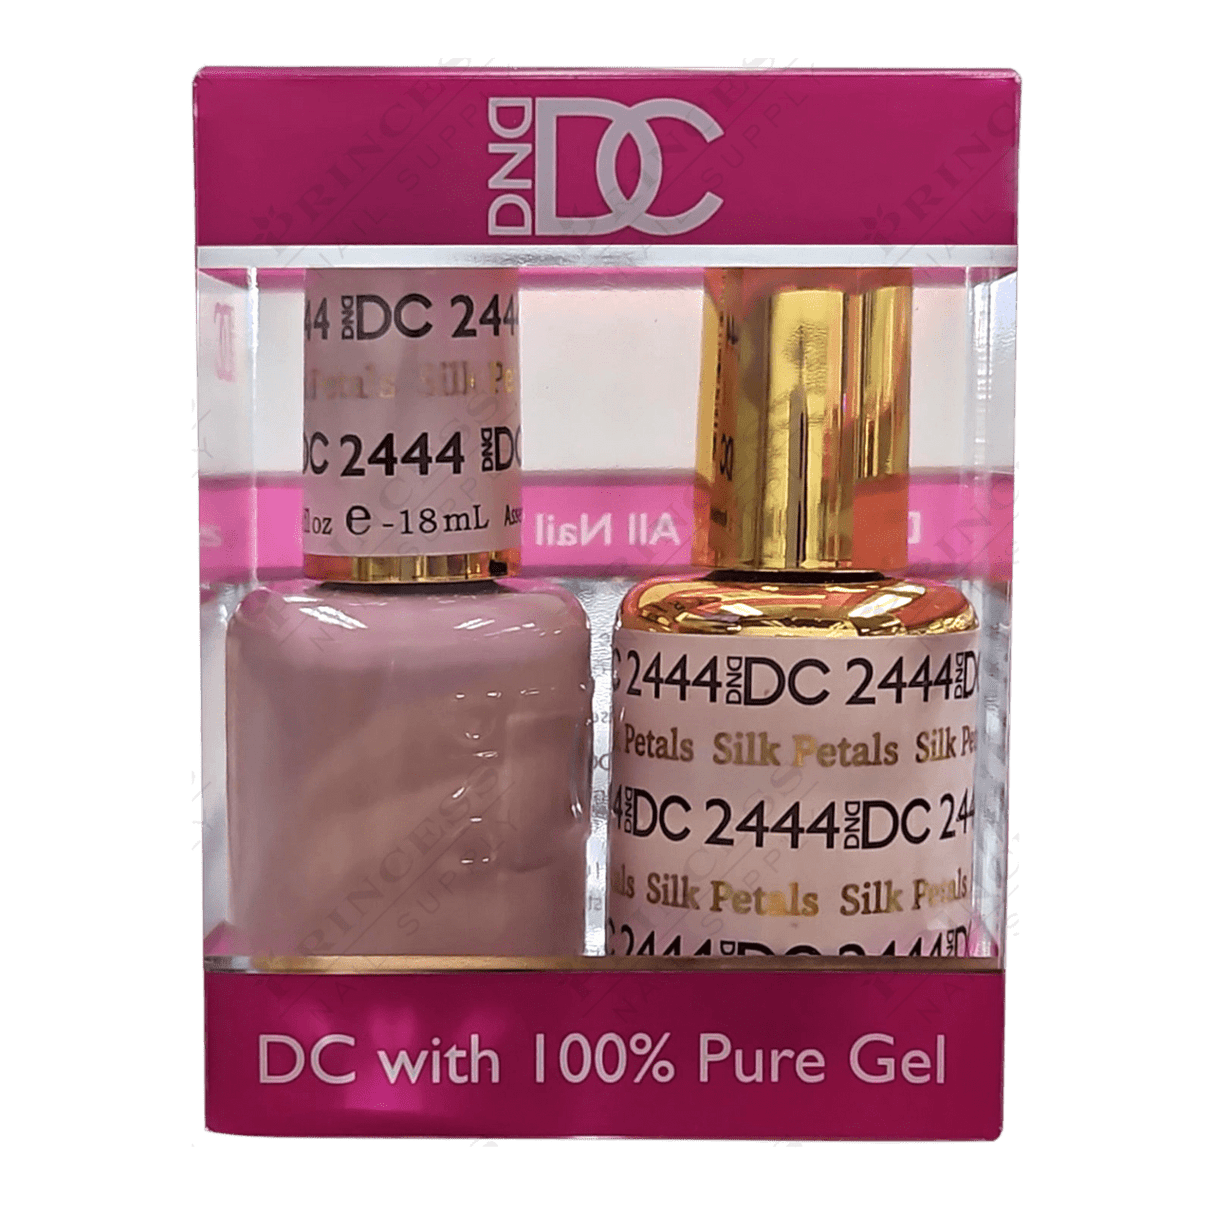 DND DC Duo Gel Matching Color 2444 Silk Petals